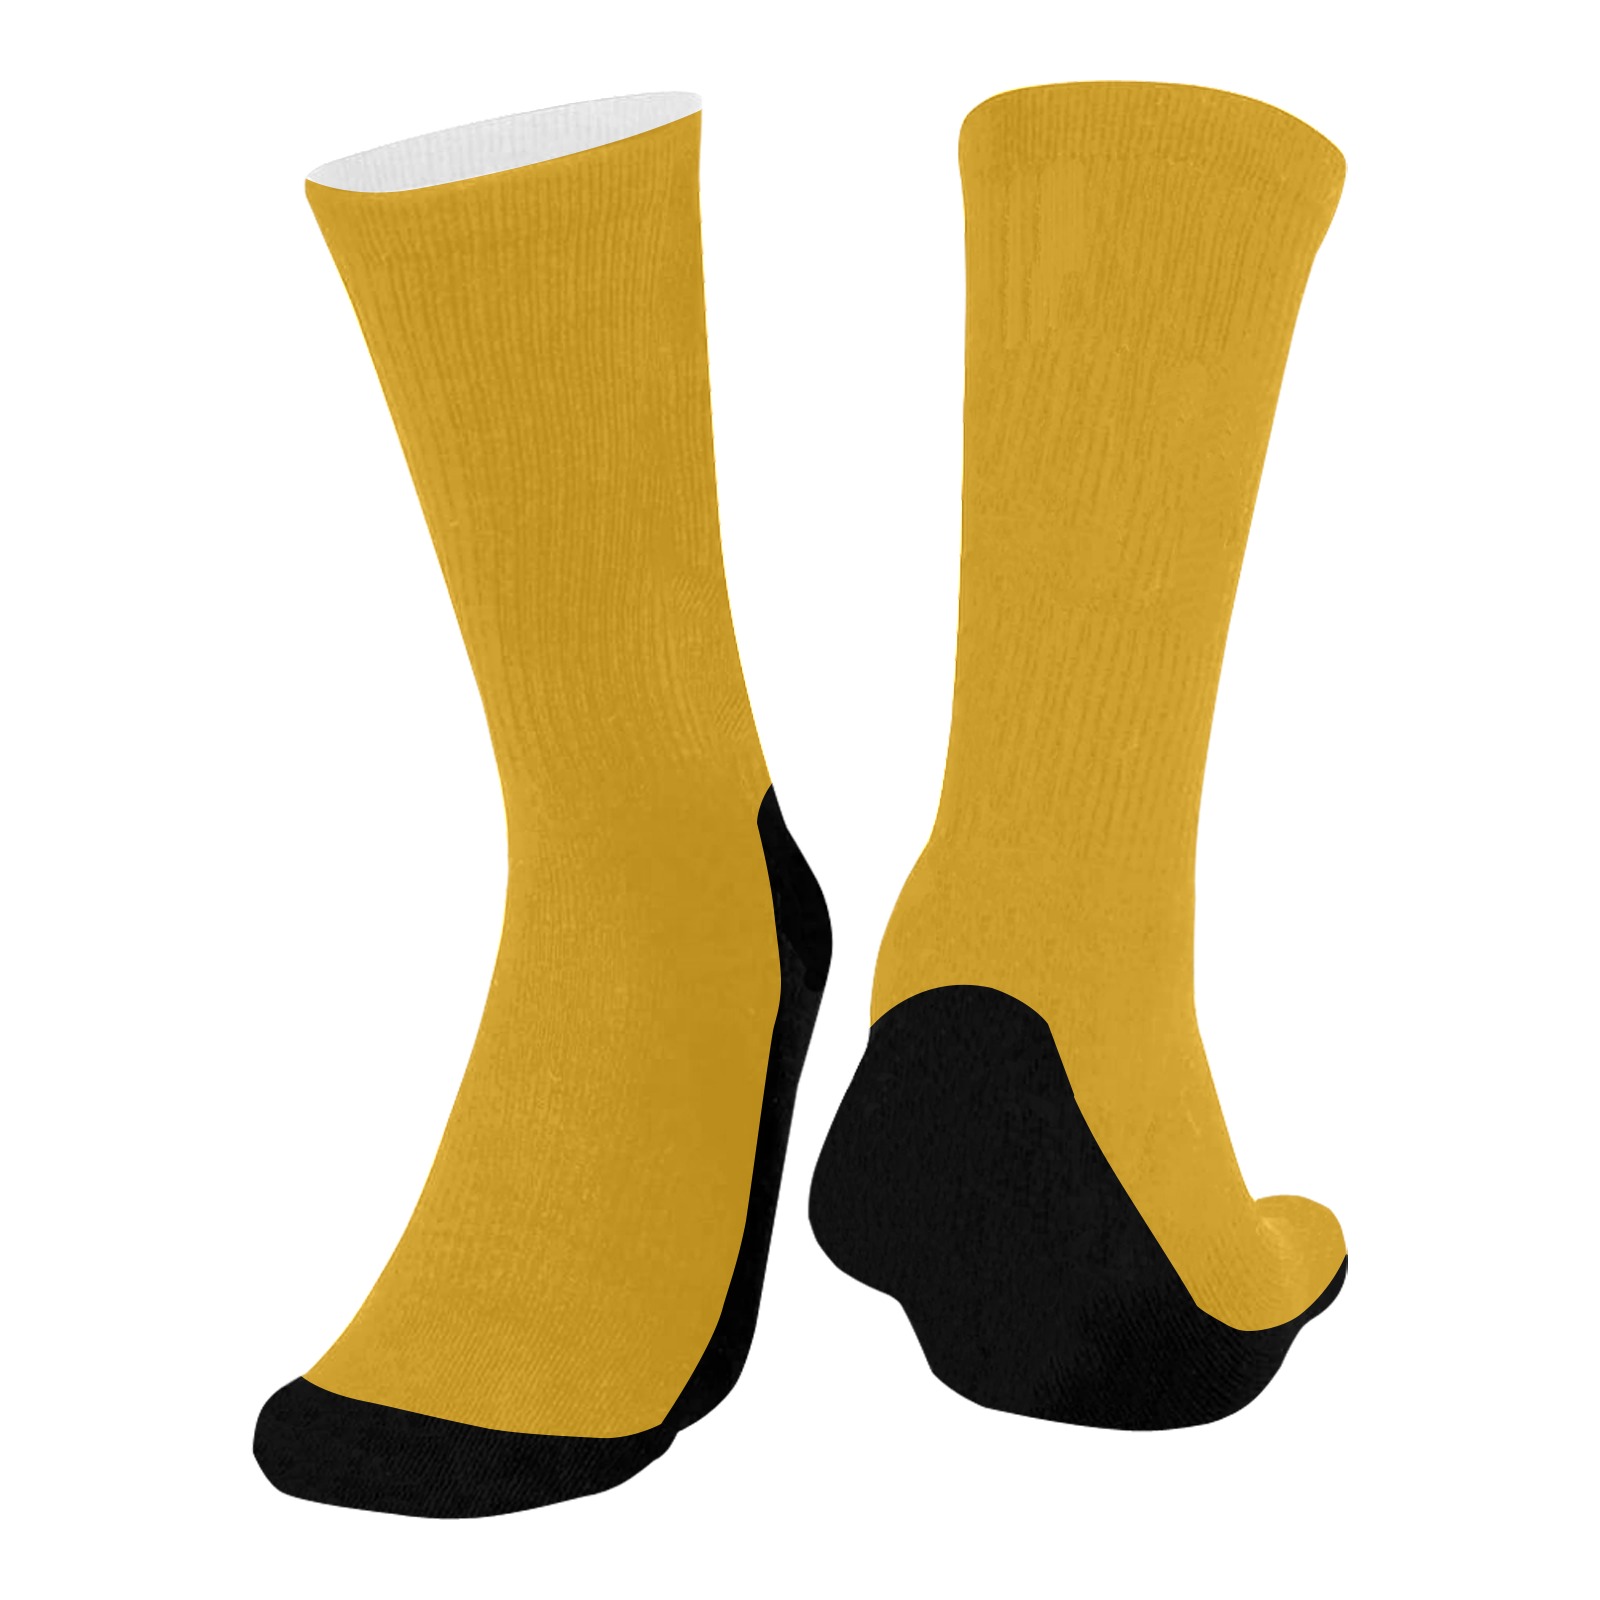 color goldenrod Mid-Calf Socks (Black Sole)